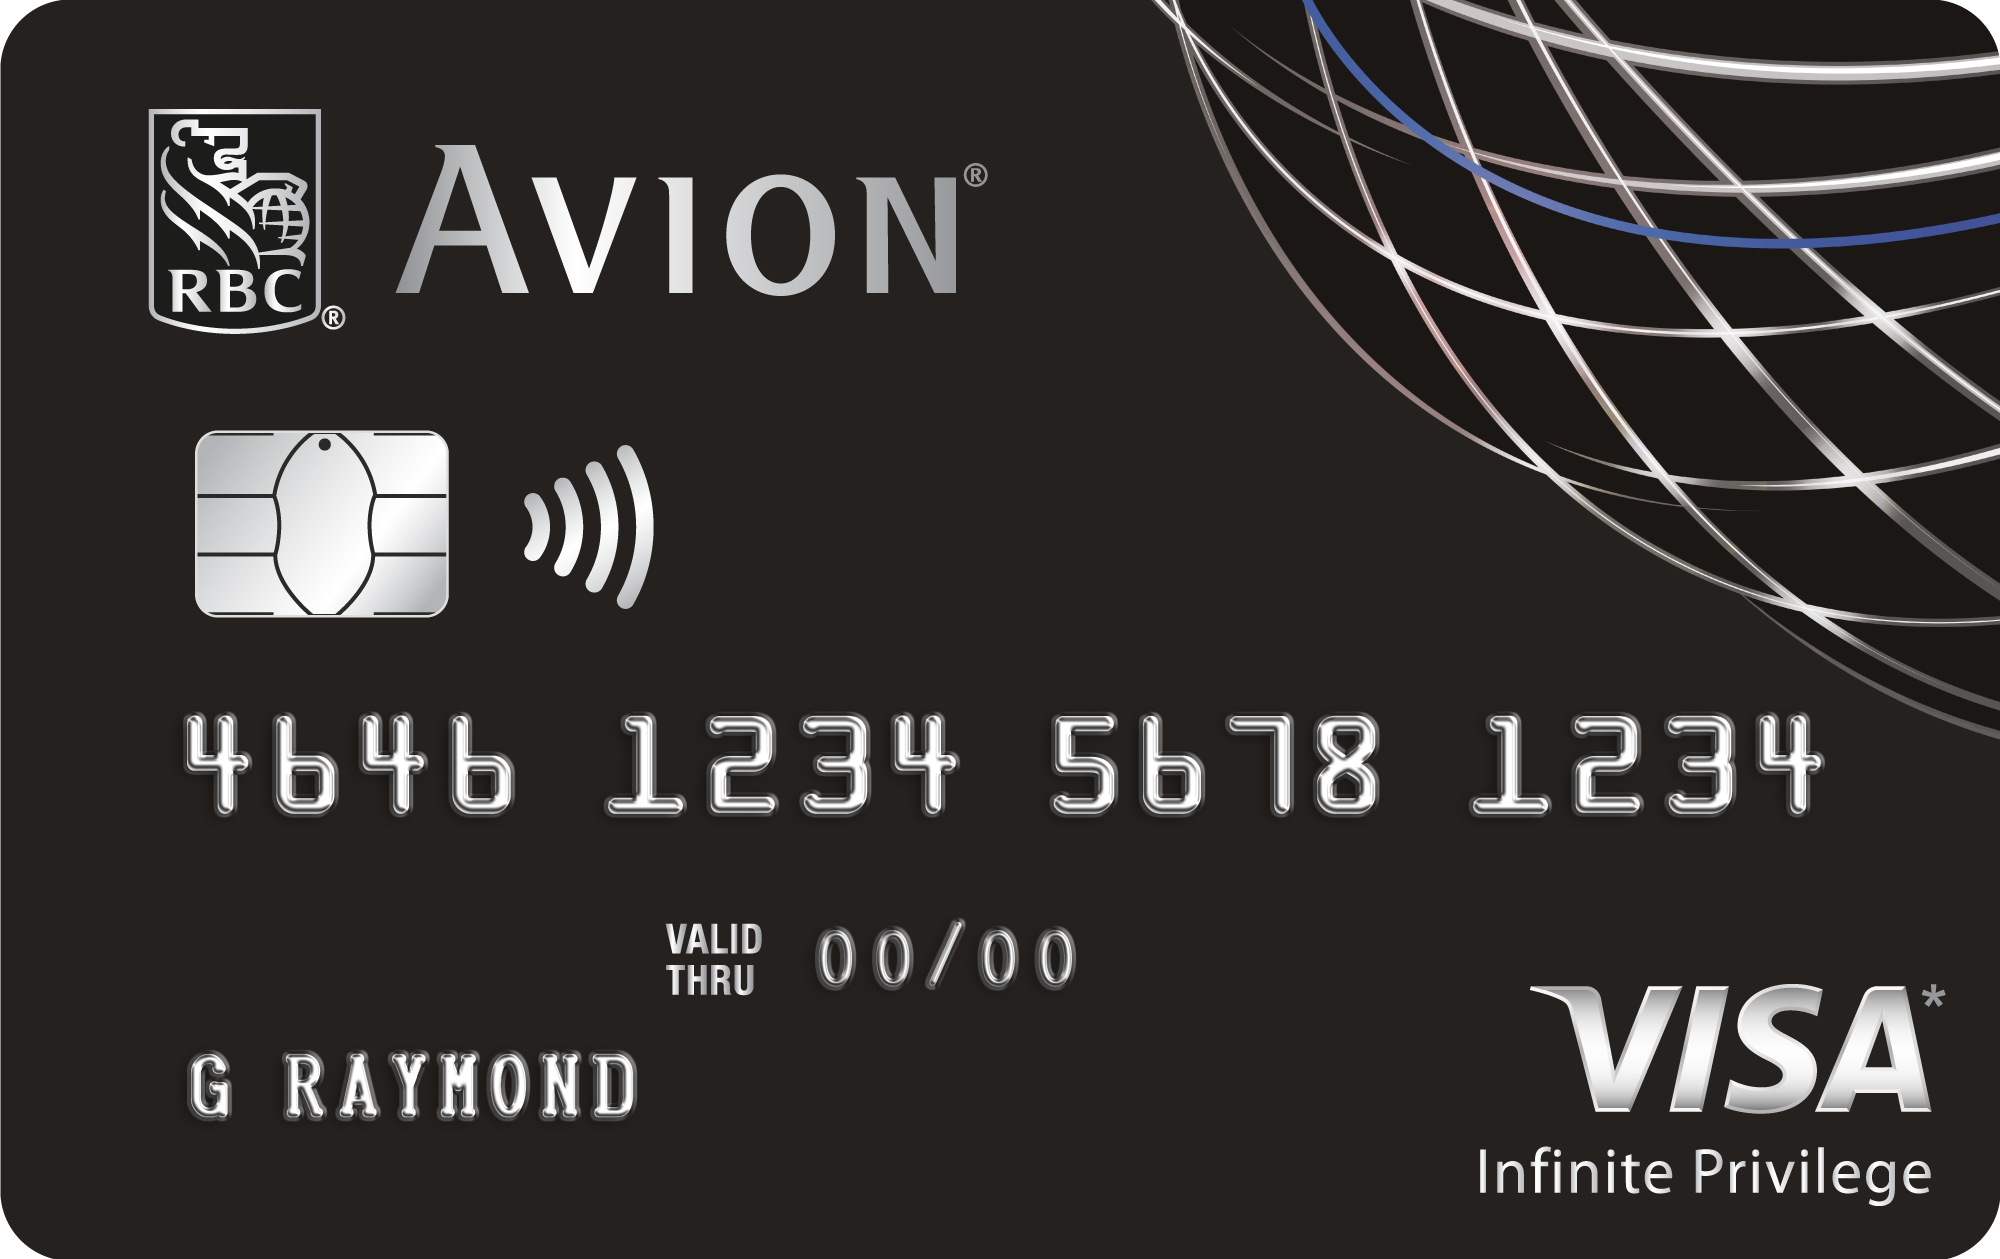 RBC® Avion® Visa Infinite Privilege* CARD